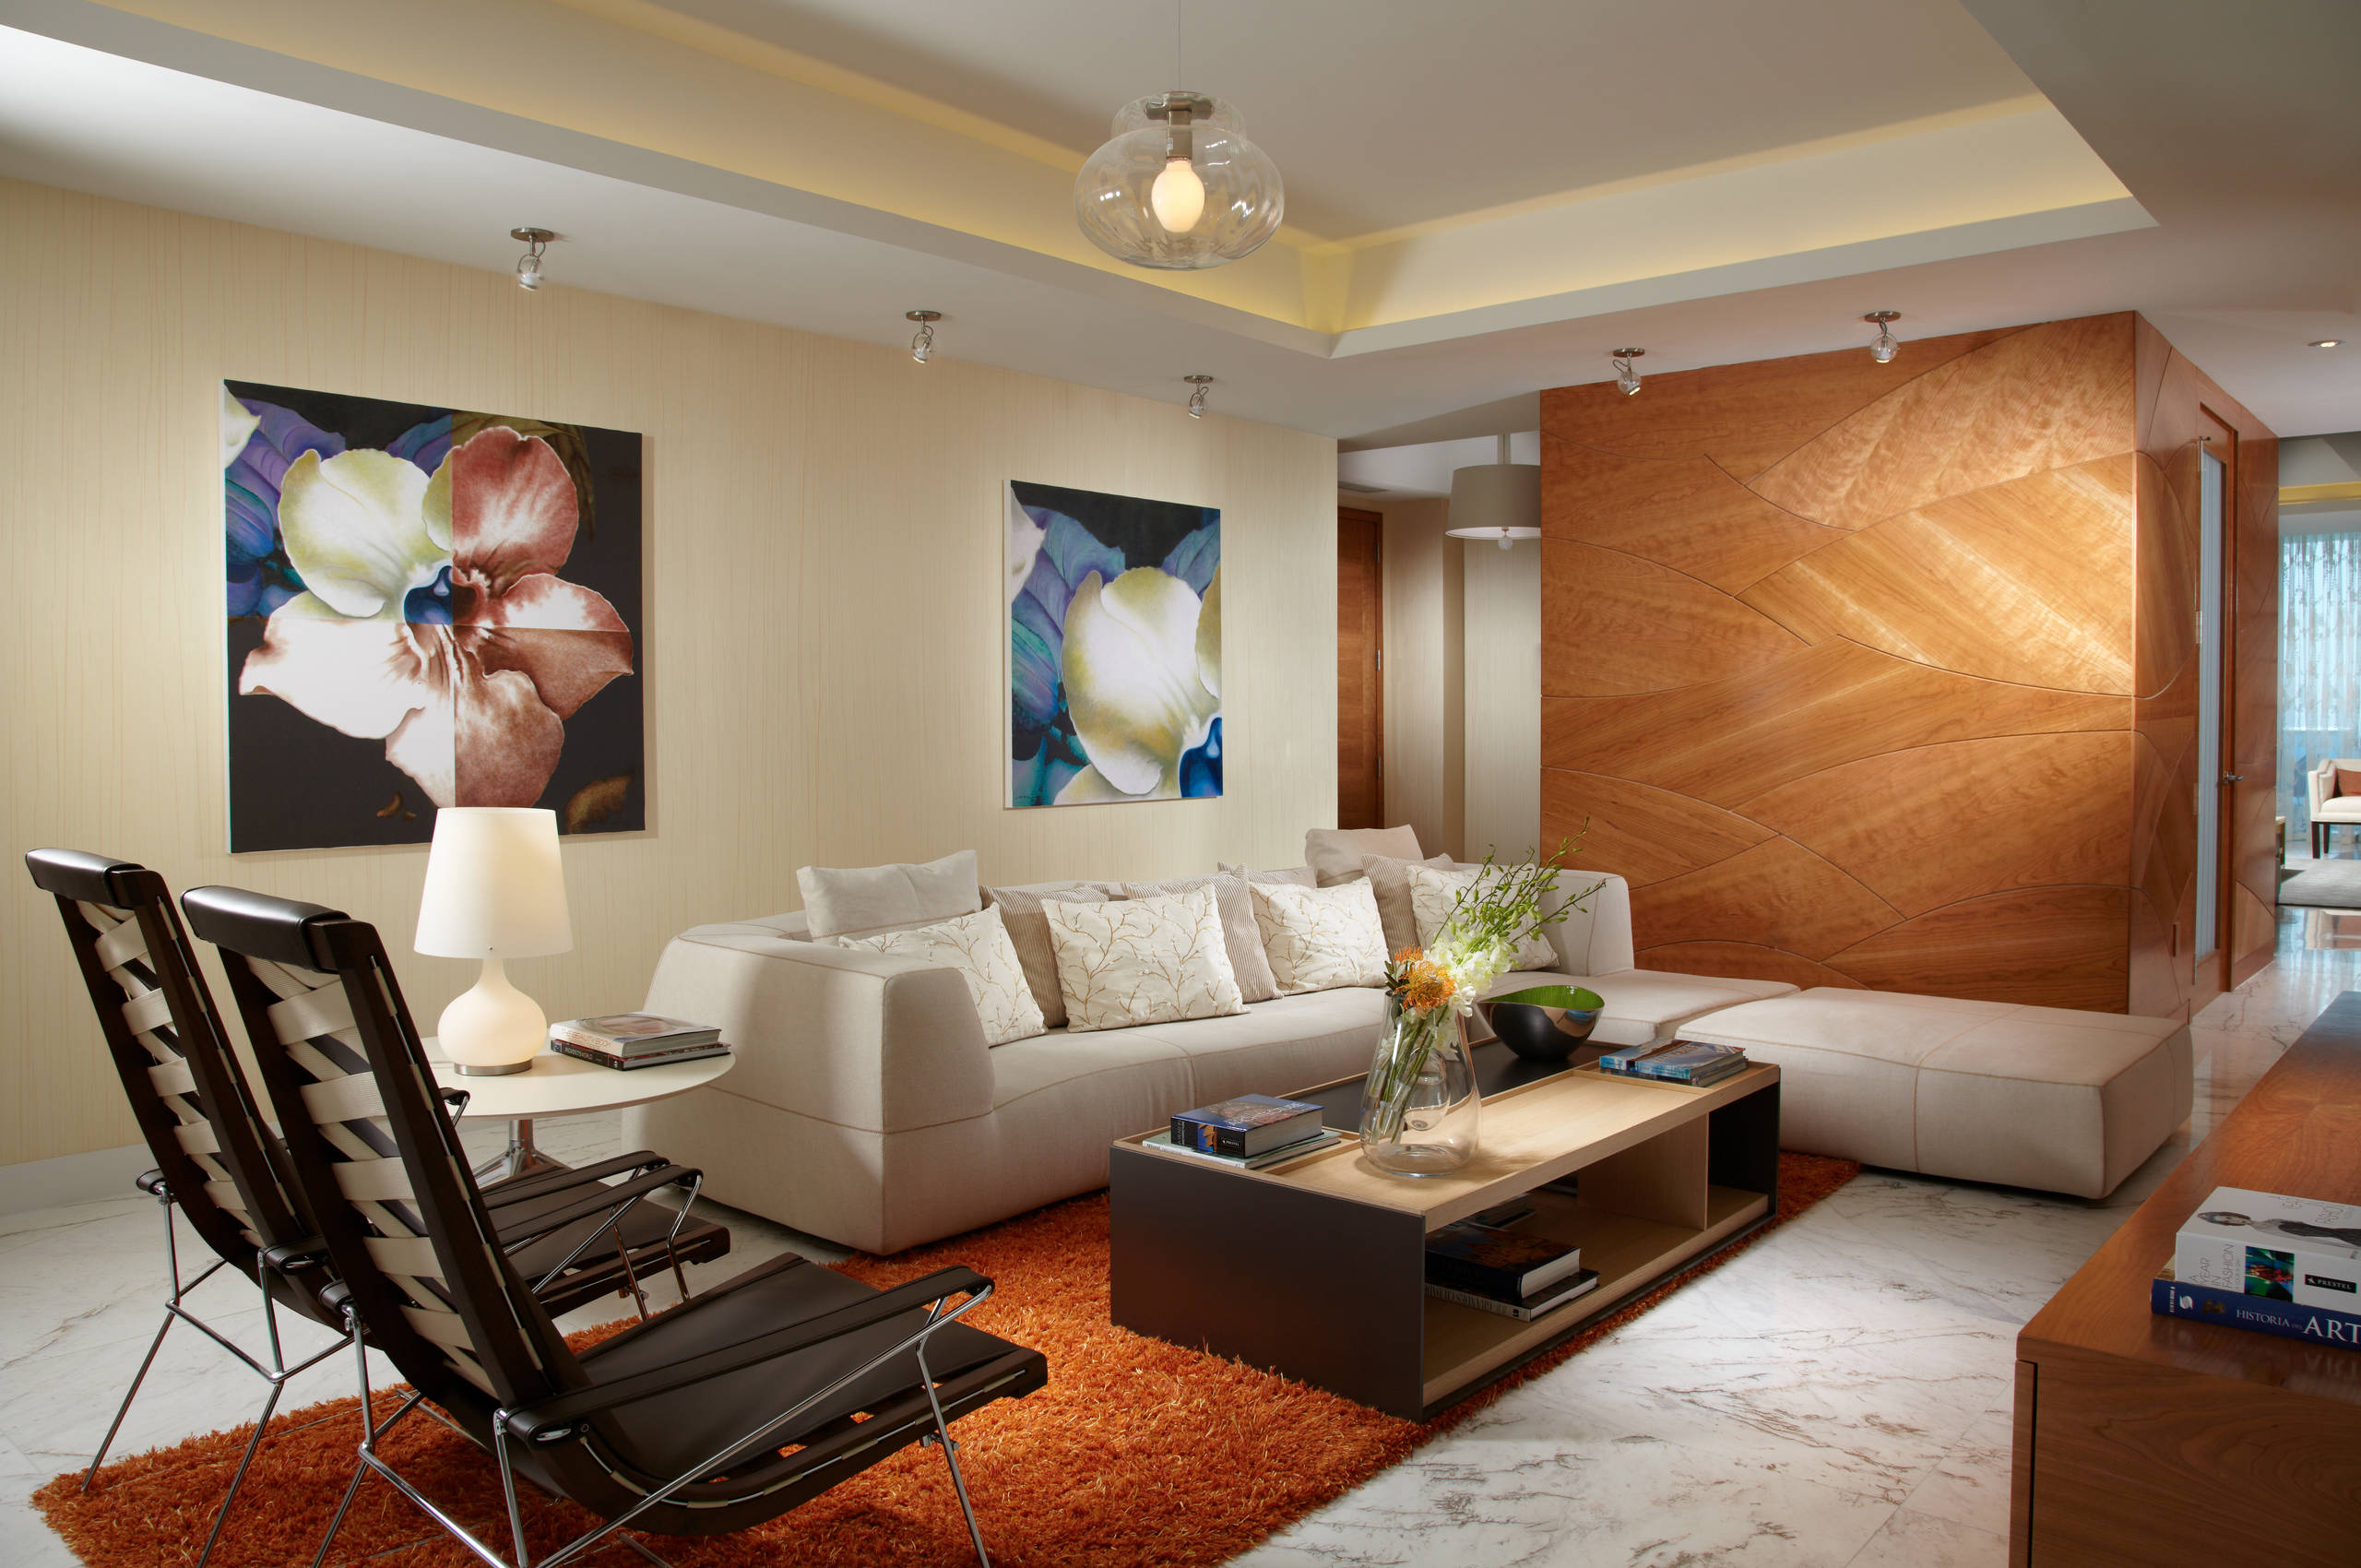 Apartment Interior Design - Photos & Ideas | Houzz